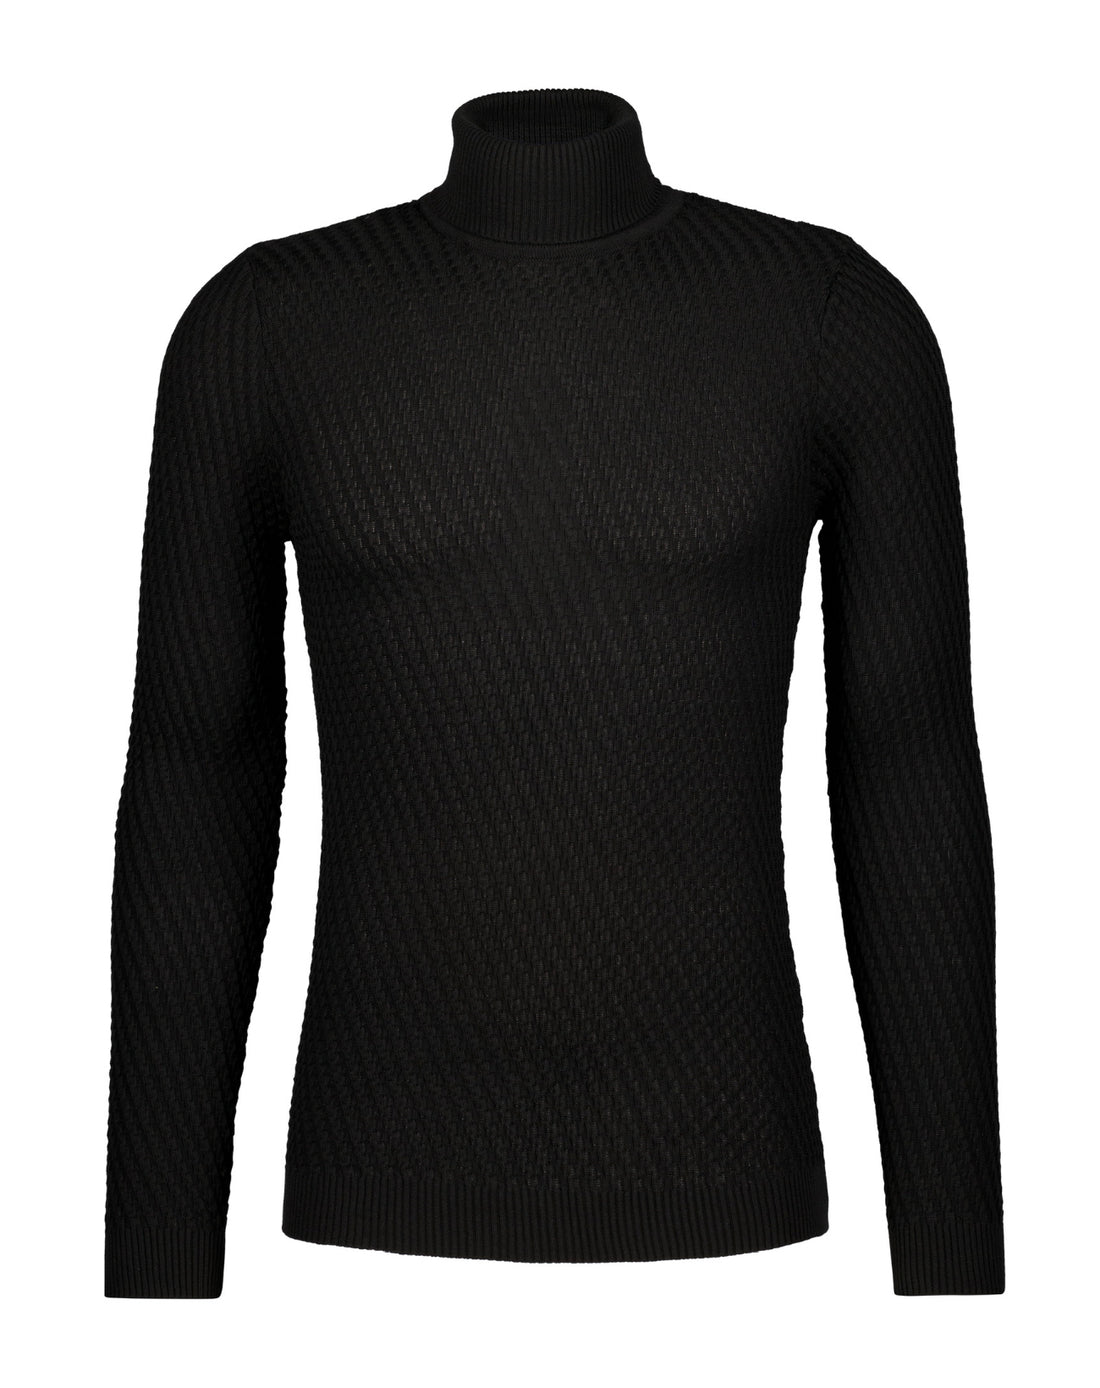 Textured Knit Turtleneck Sweater -  Black - Sweater by Urbbana